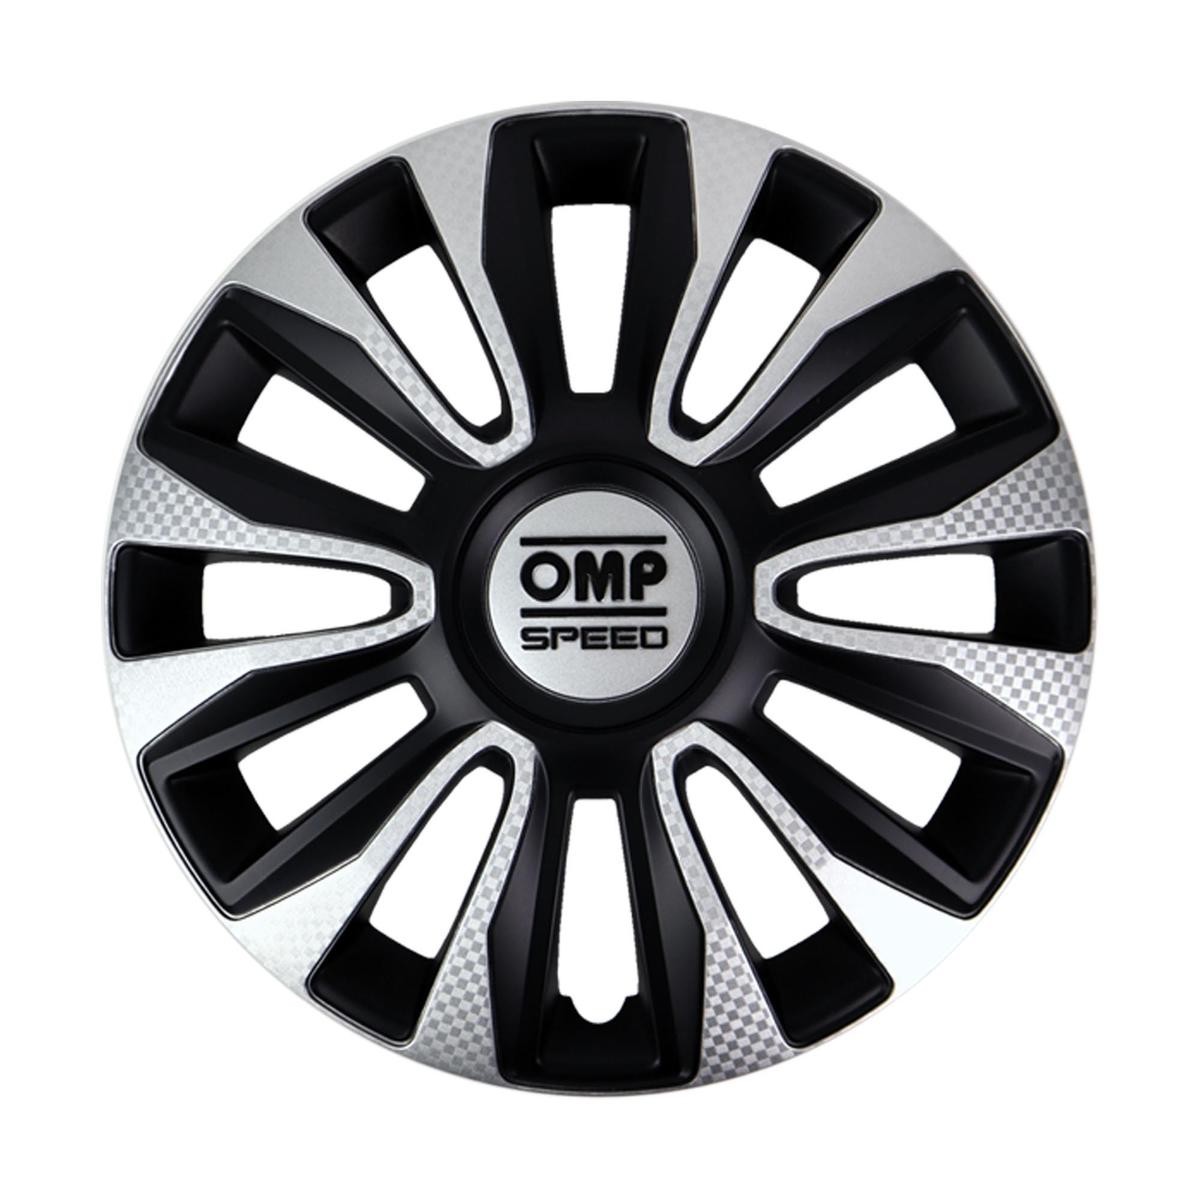 OMP OMPS07011422 Car wheel trims VW Golf 7 (5G1, BQ1, BE1, BE2) 14 Inch black/silver, Carbon